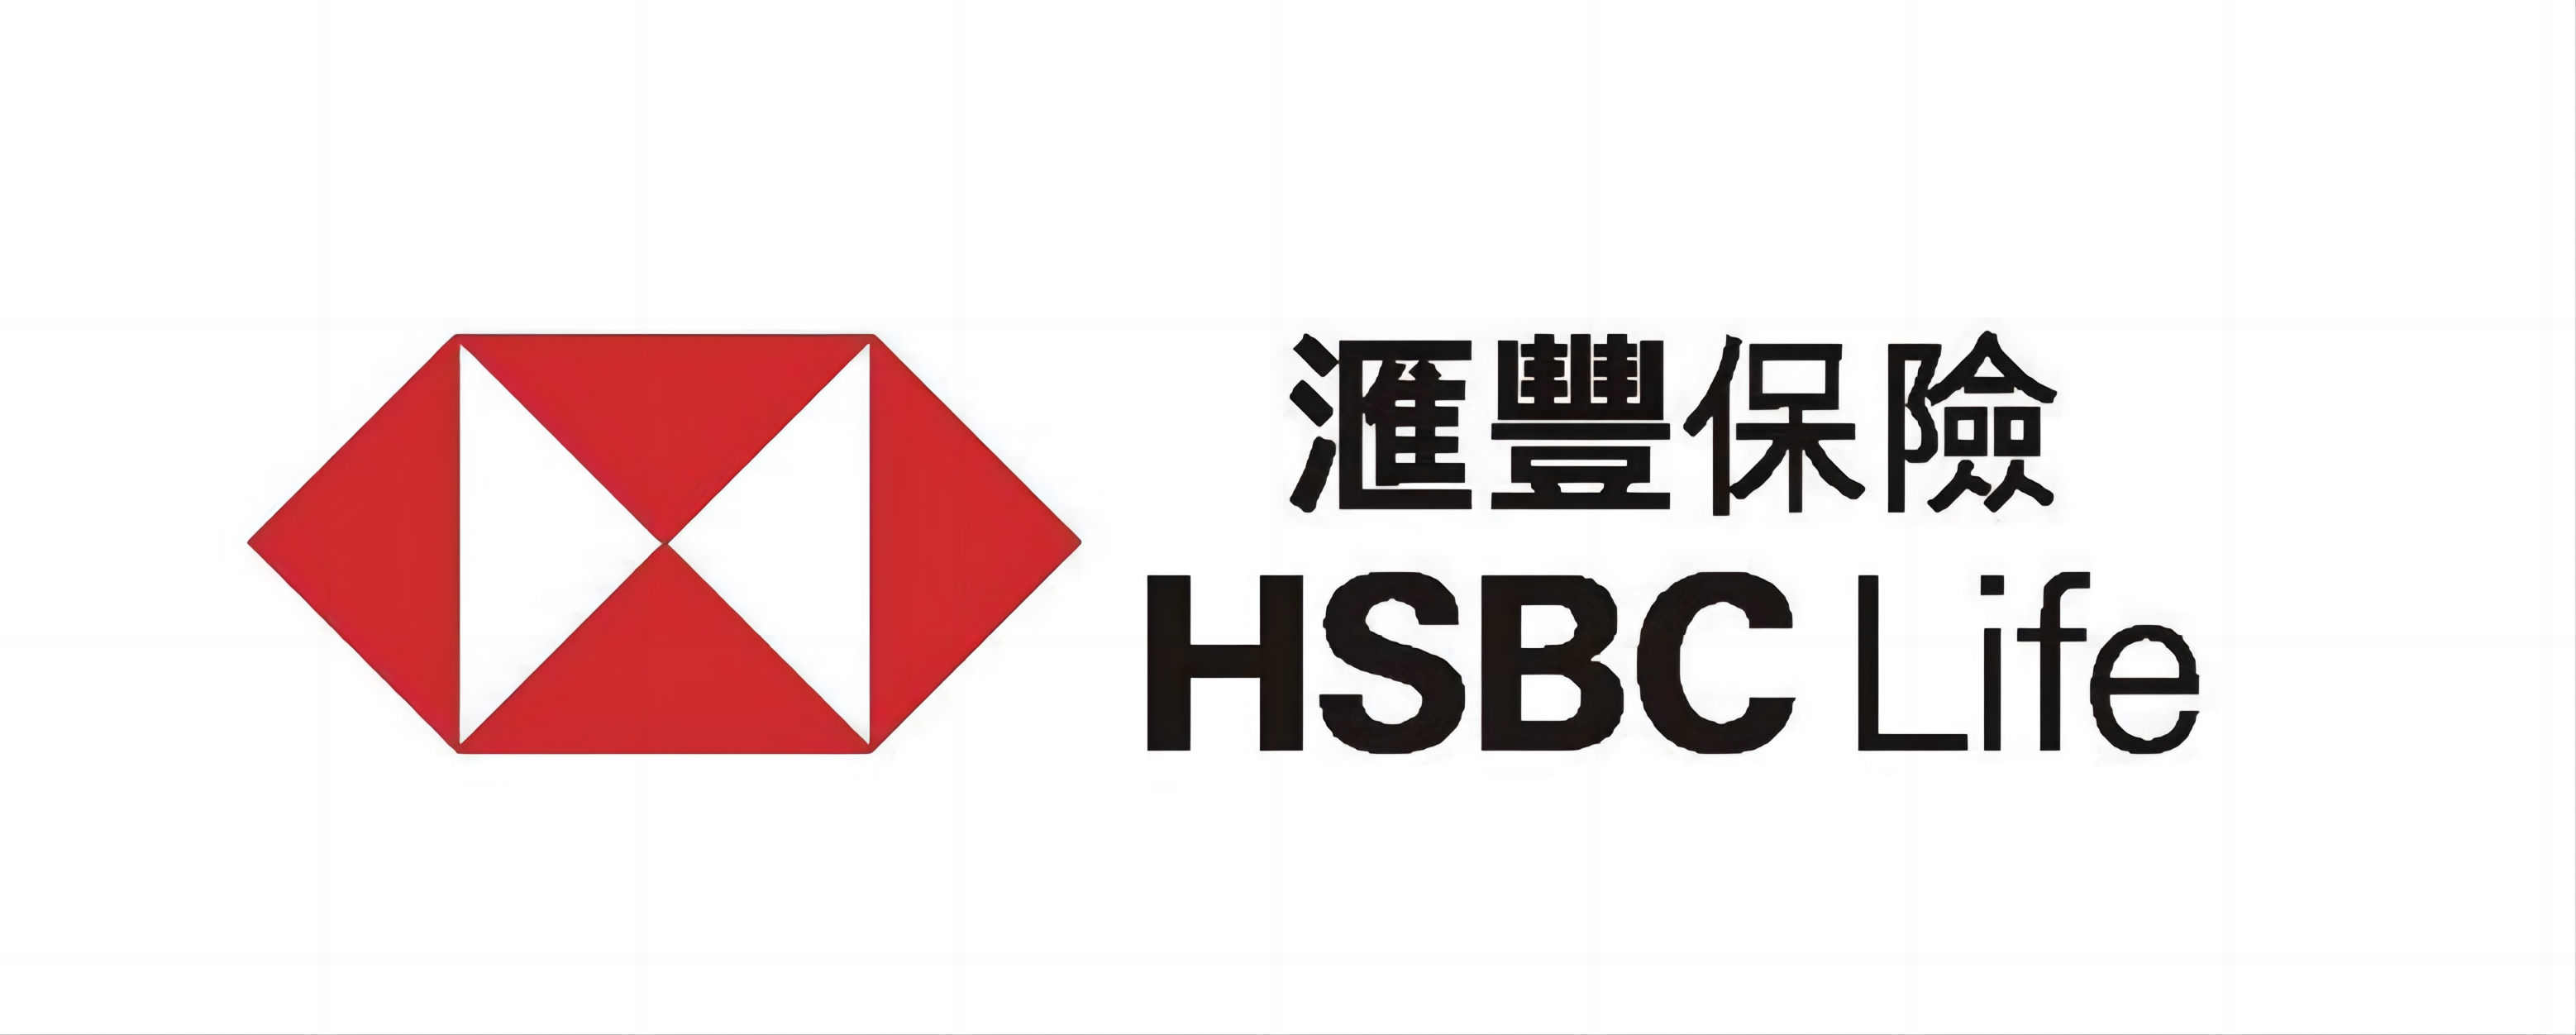 HSBC Life  _v2.png